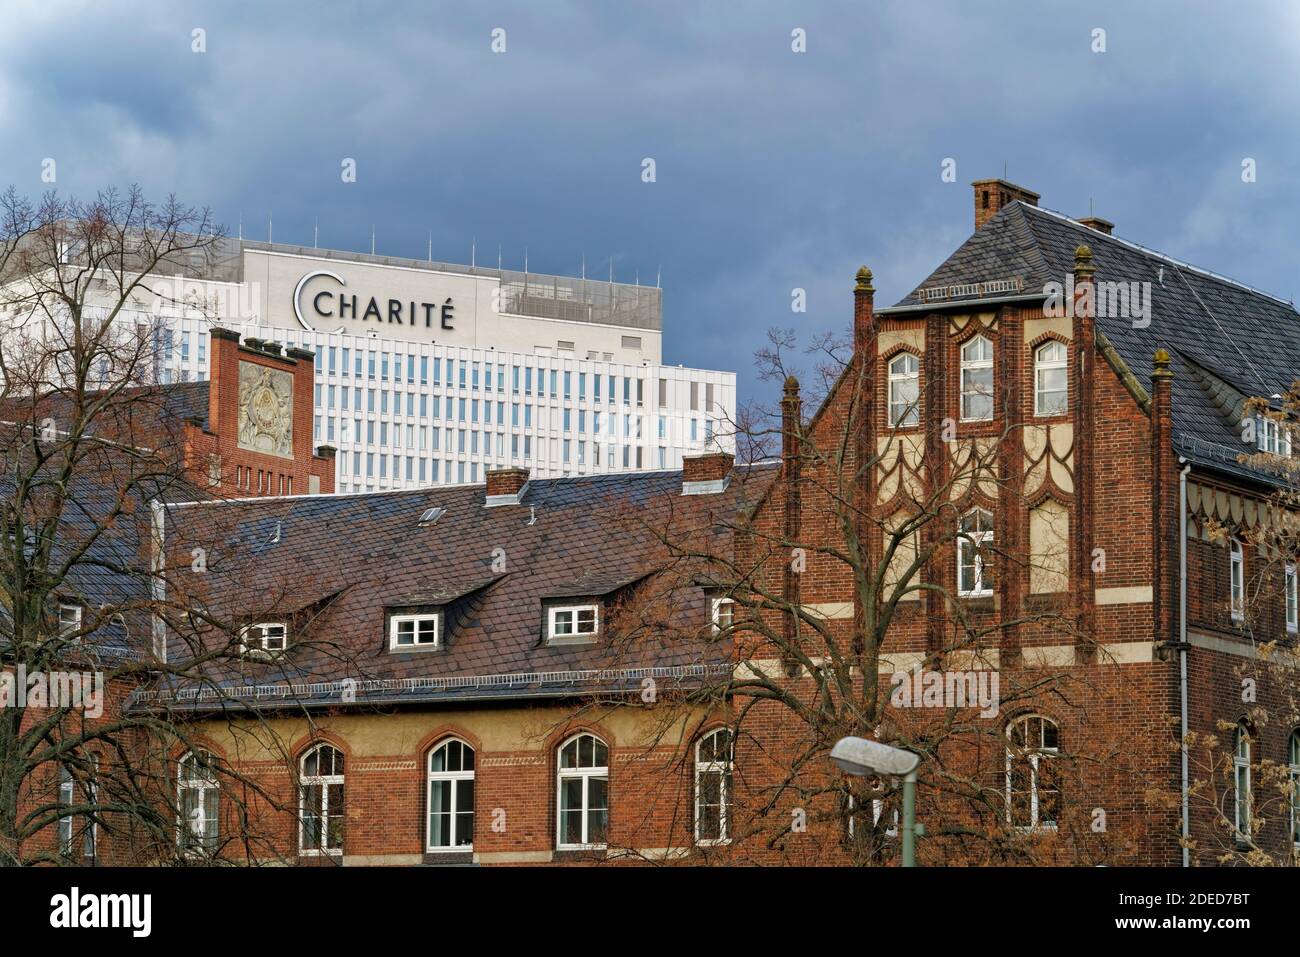 Charite, Krankenhaus, Berlin-Mitte, Berlin, Allemagne, Banque D'Images